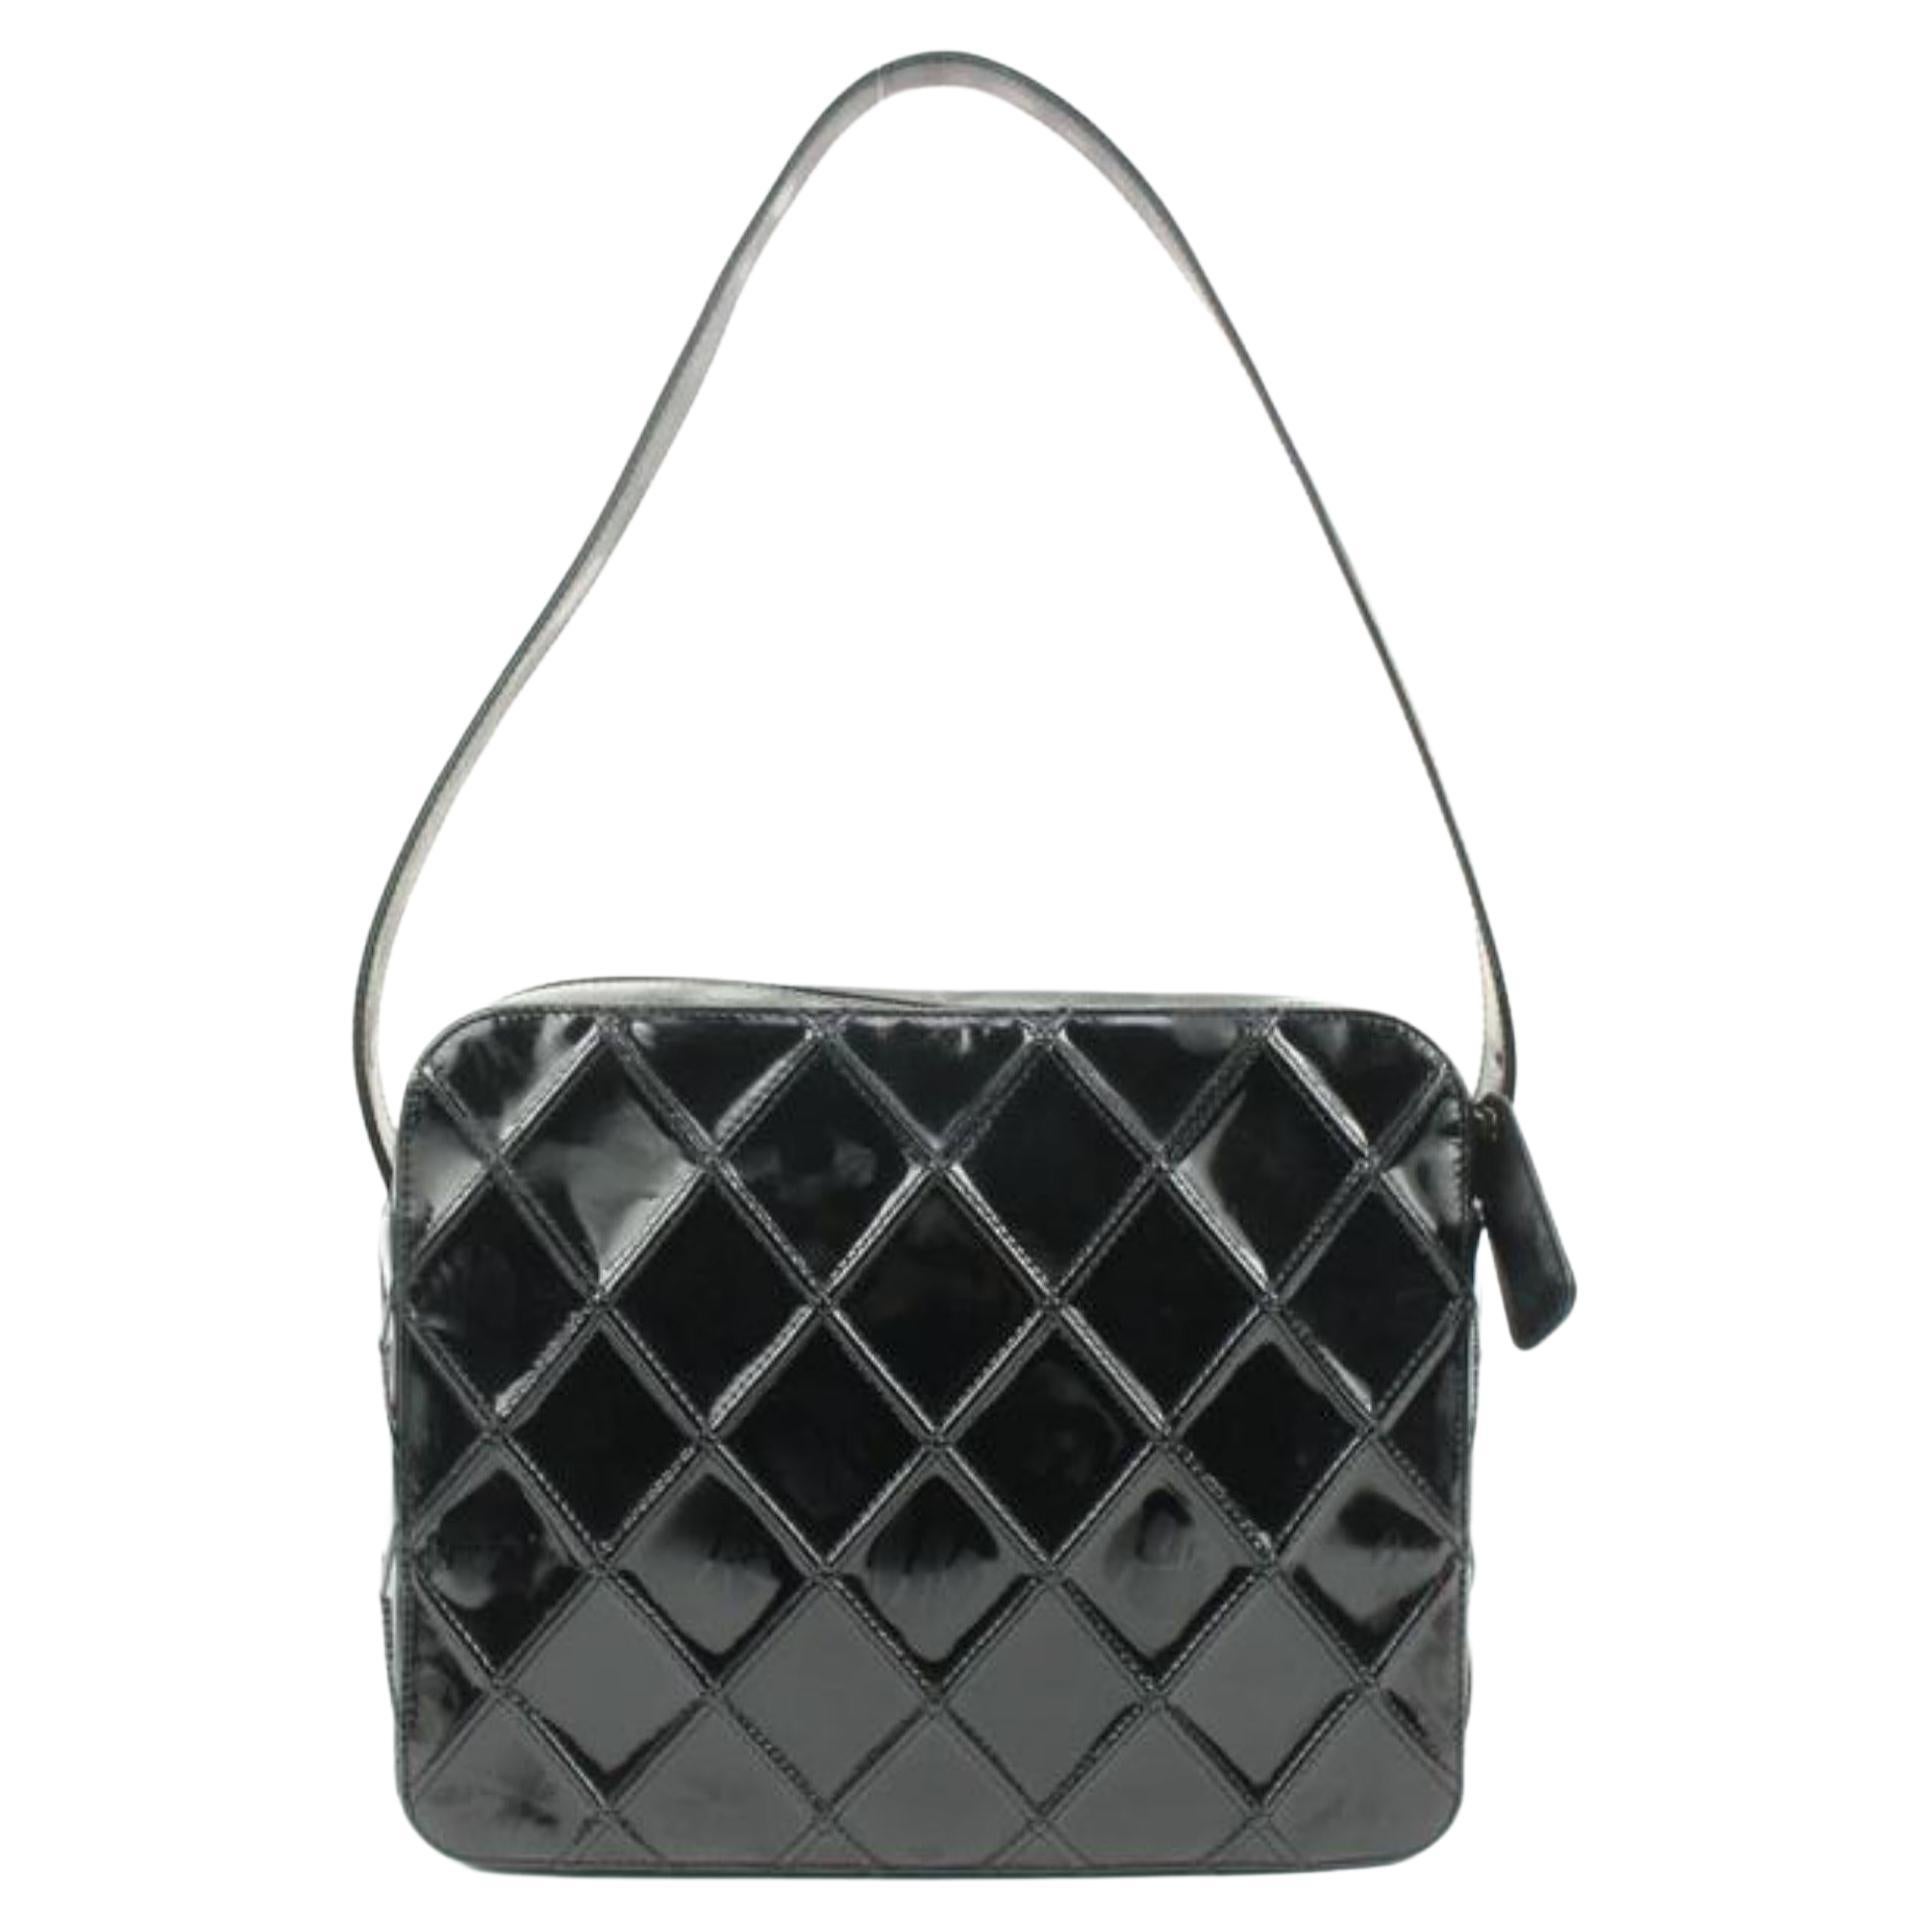 CHANEL Black Patent Bags & Handbags for Women